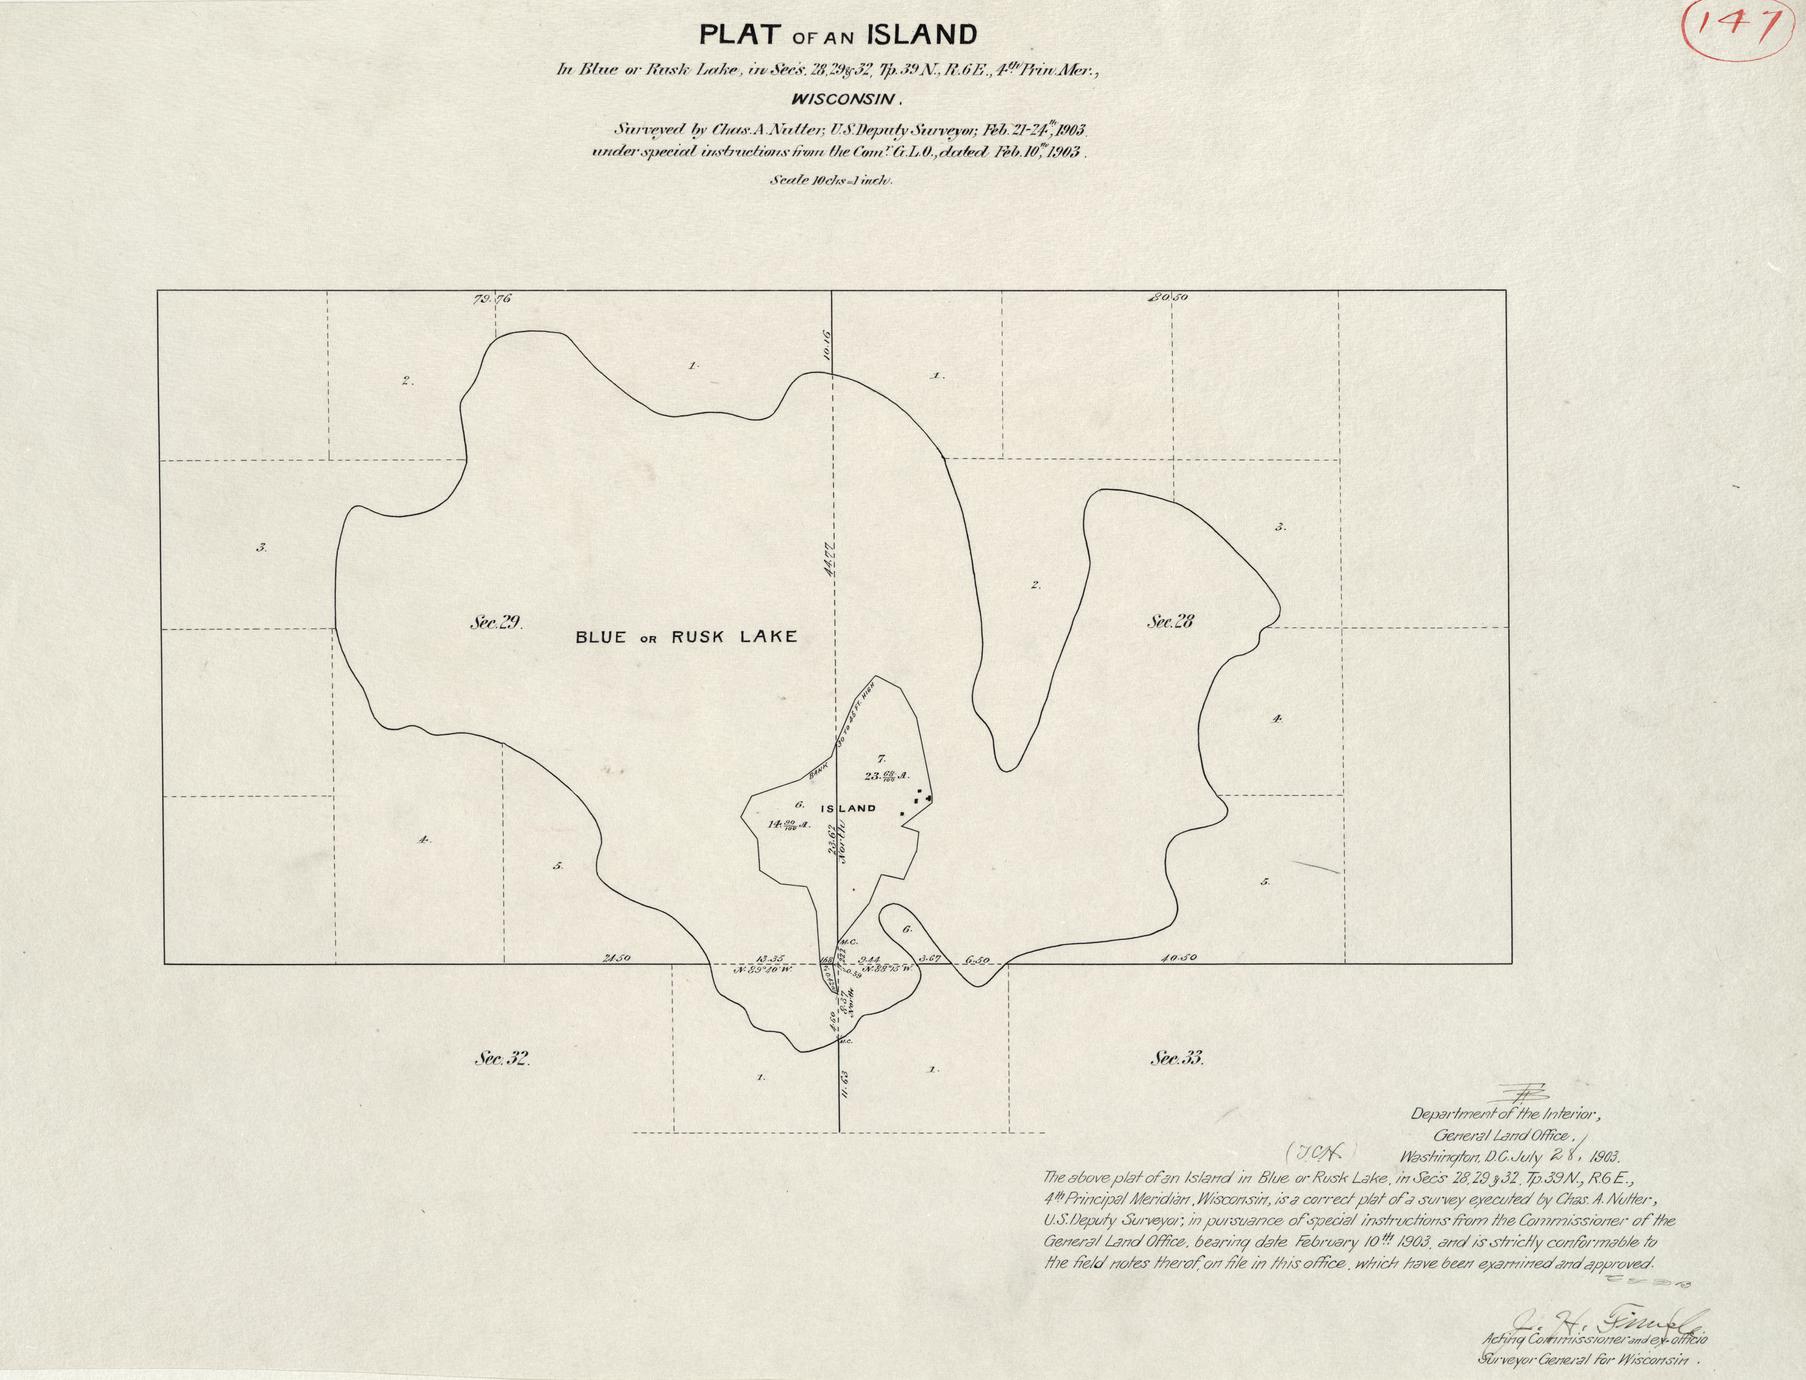 [Public Land Survey System map: Wisconsin Township 39 North, Range 06 East]